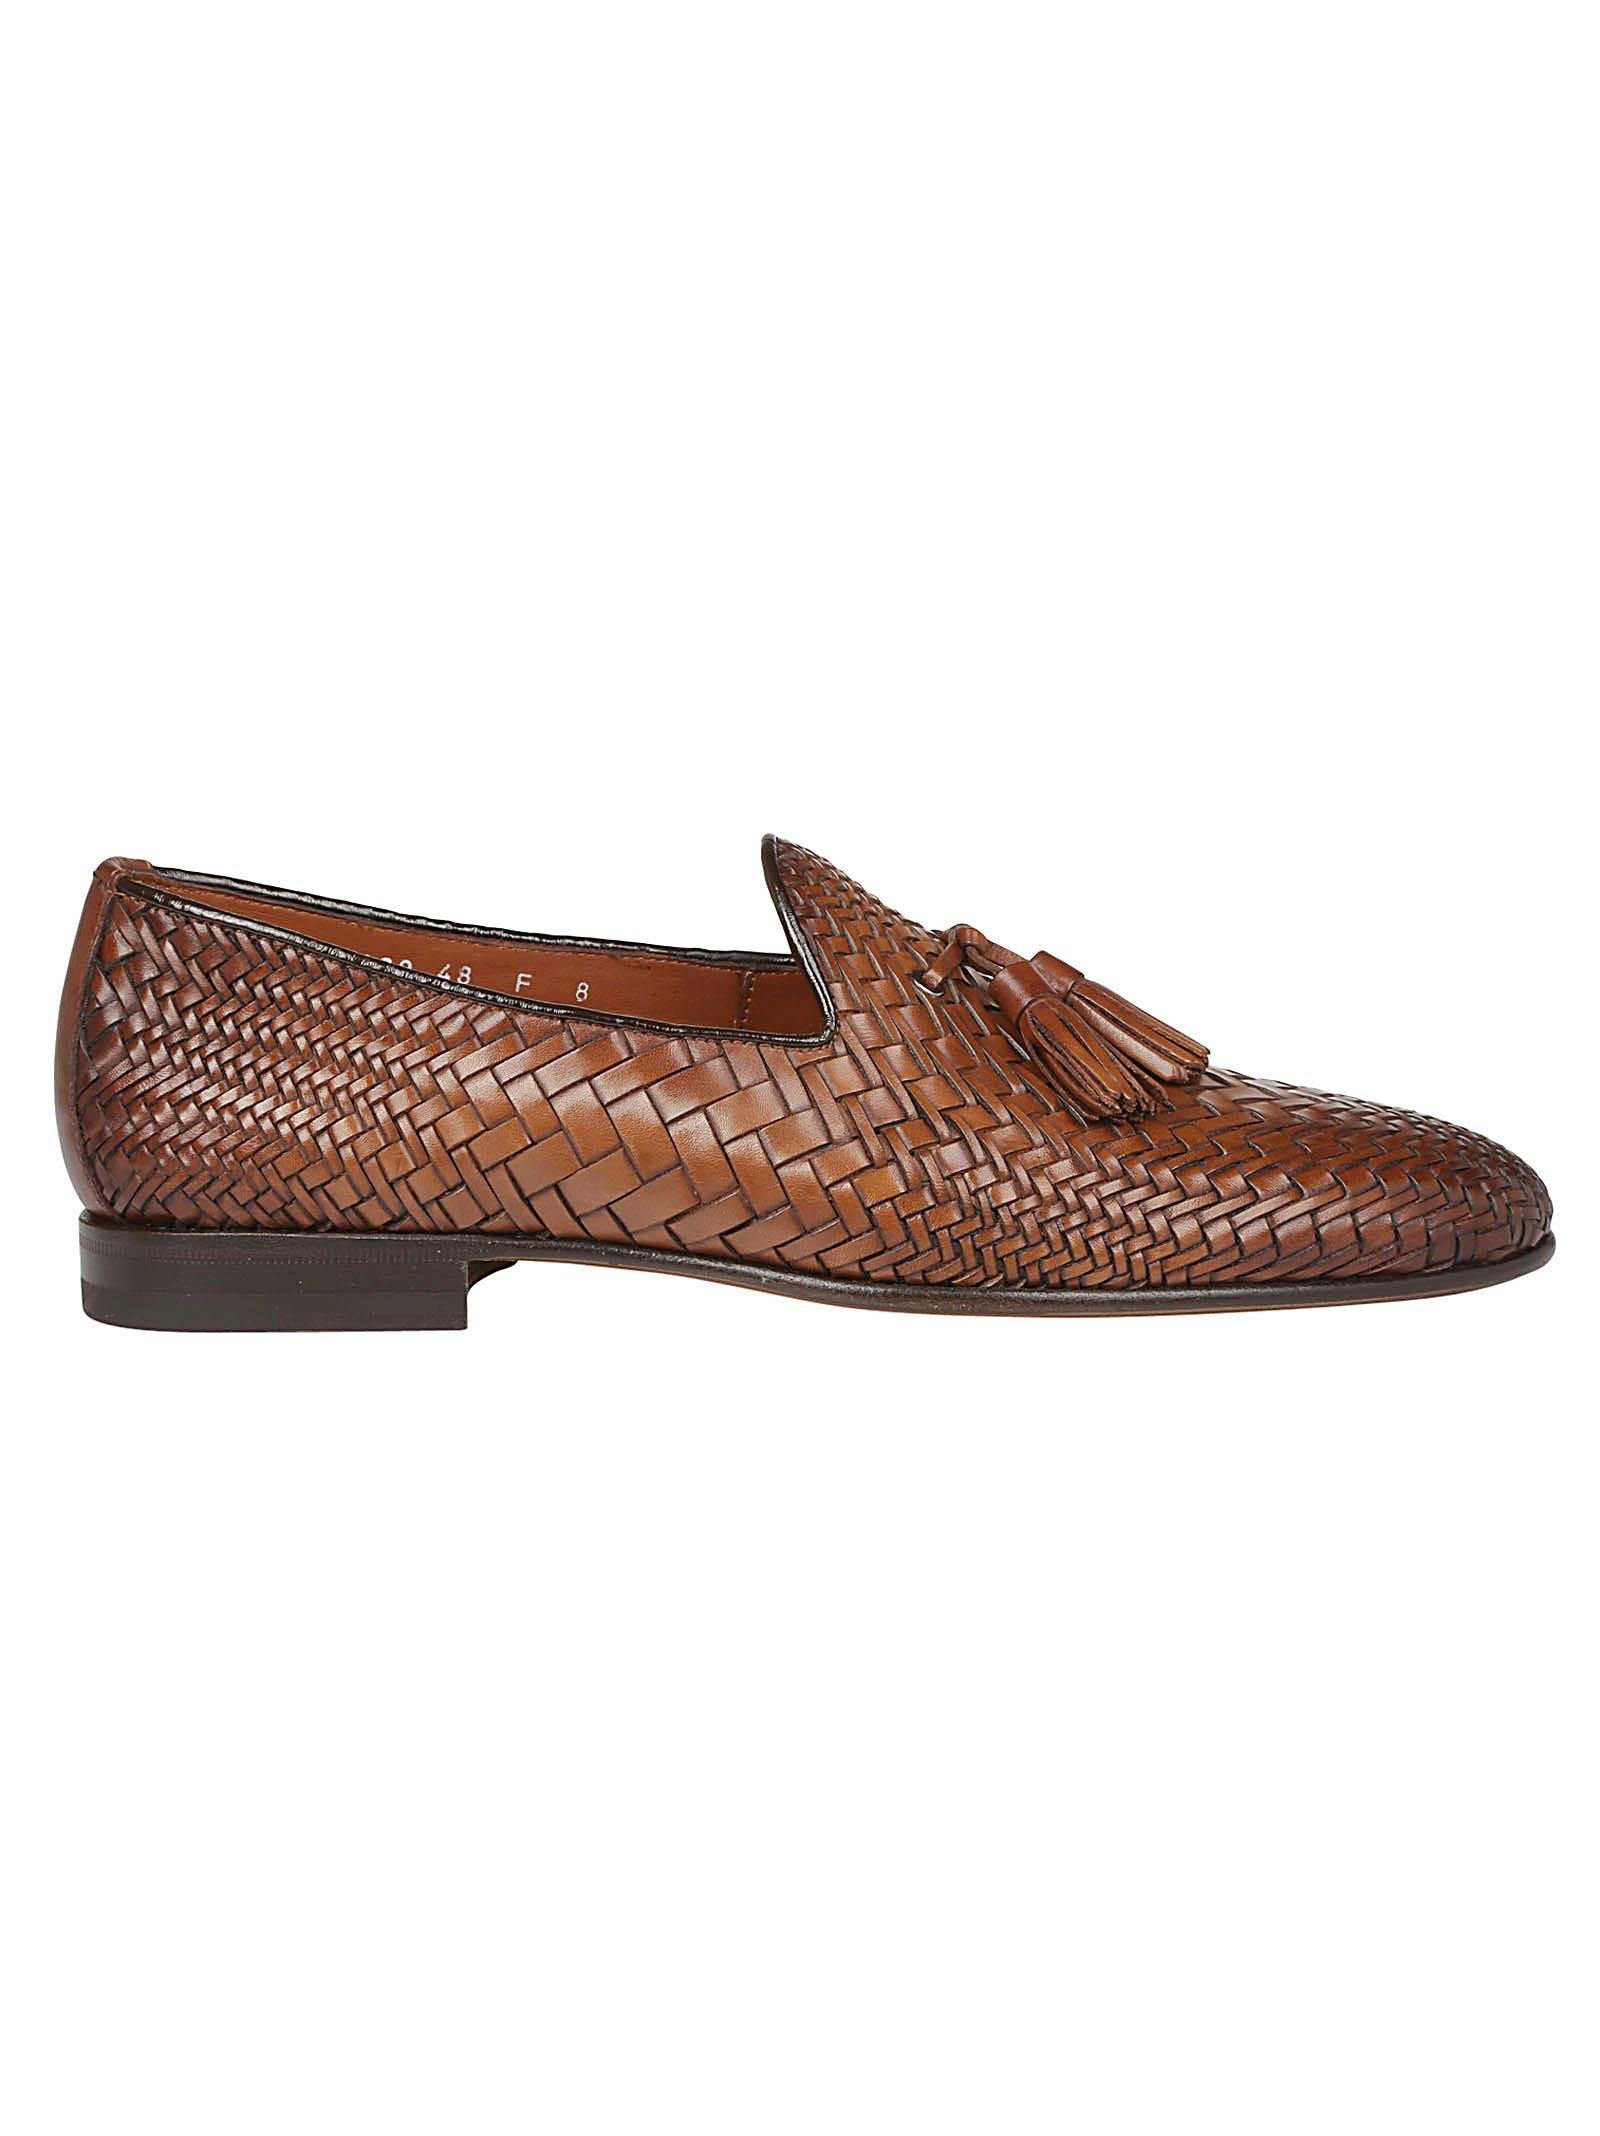 Santoni Leather Woven Tassel Loafers in Brown for Men | Lyst